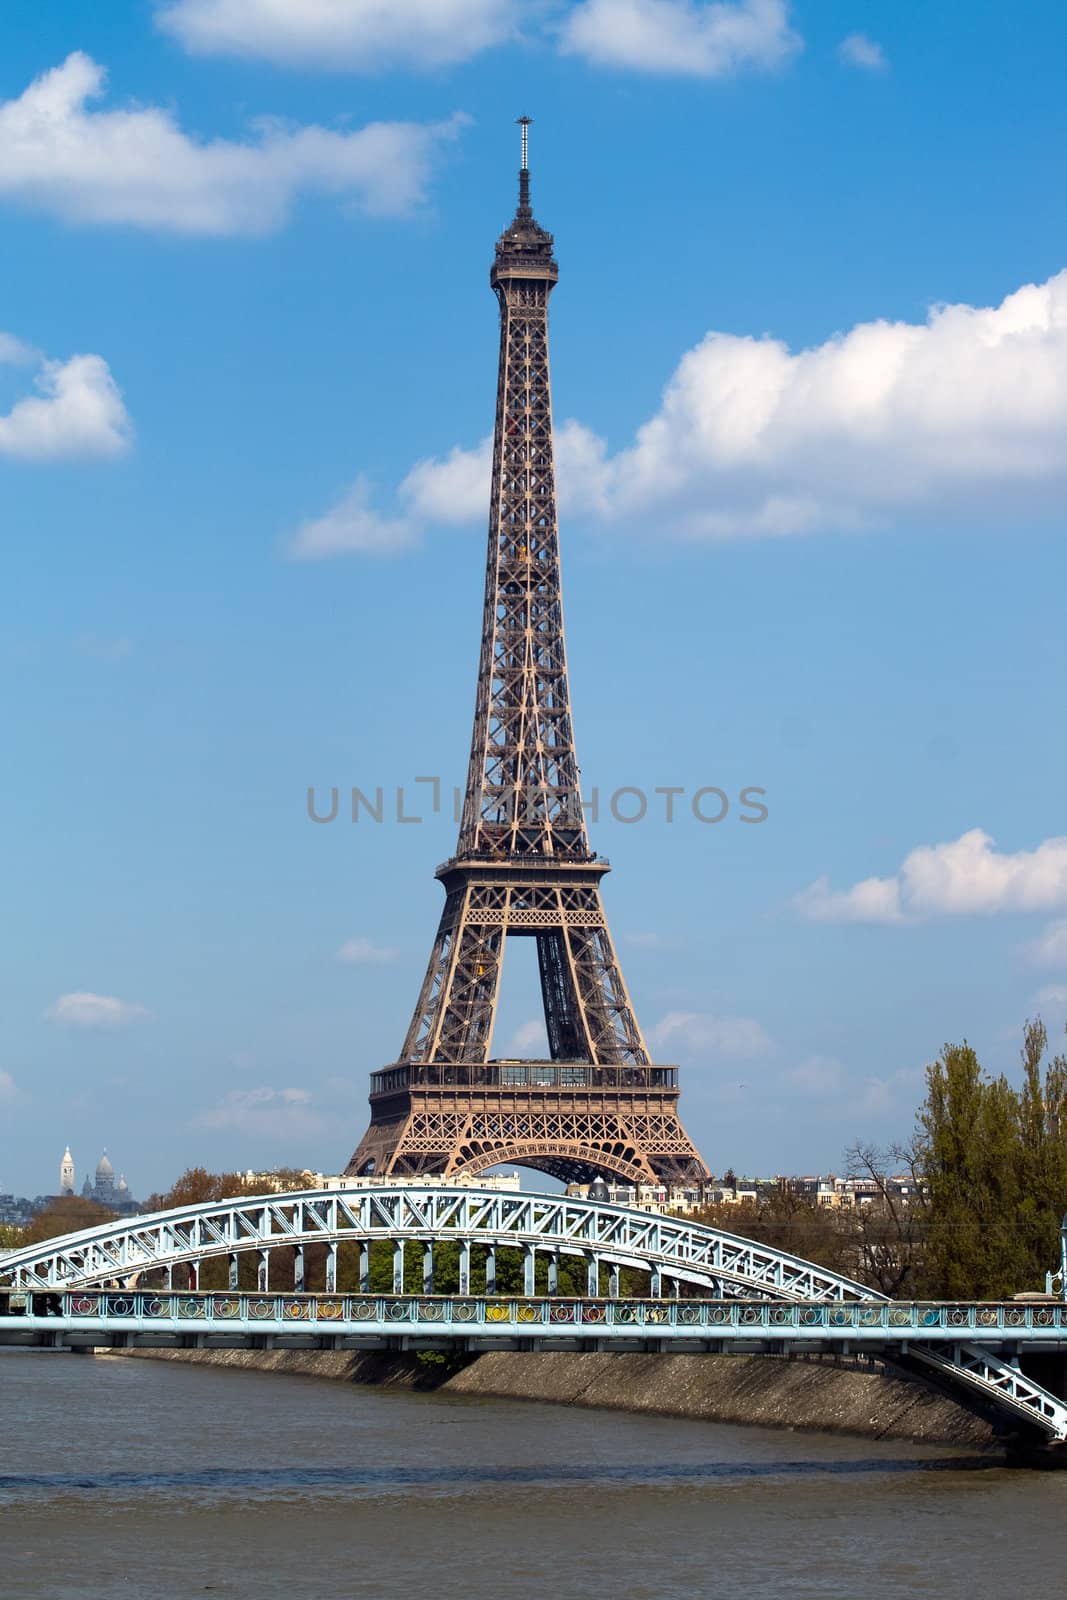 Eifel tower and railway bridge in Paris by ints